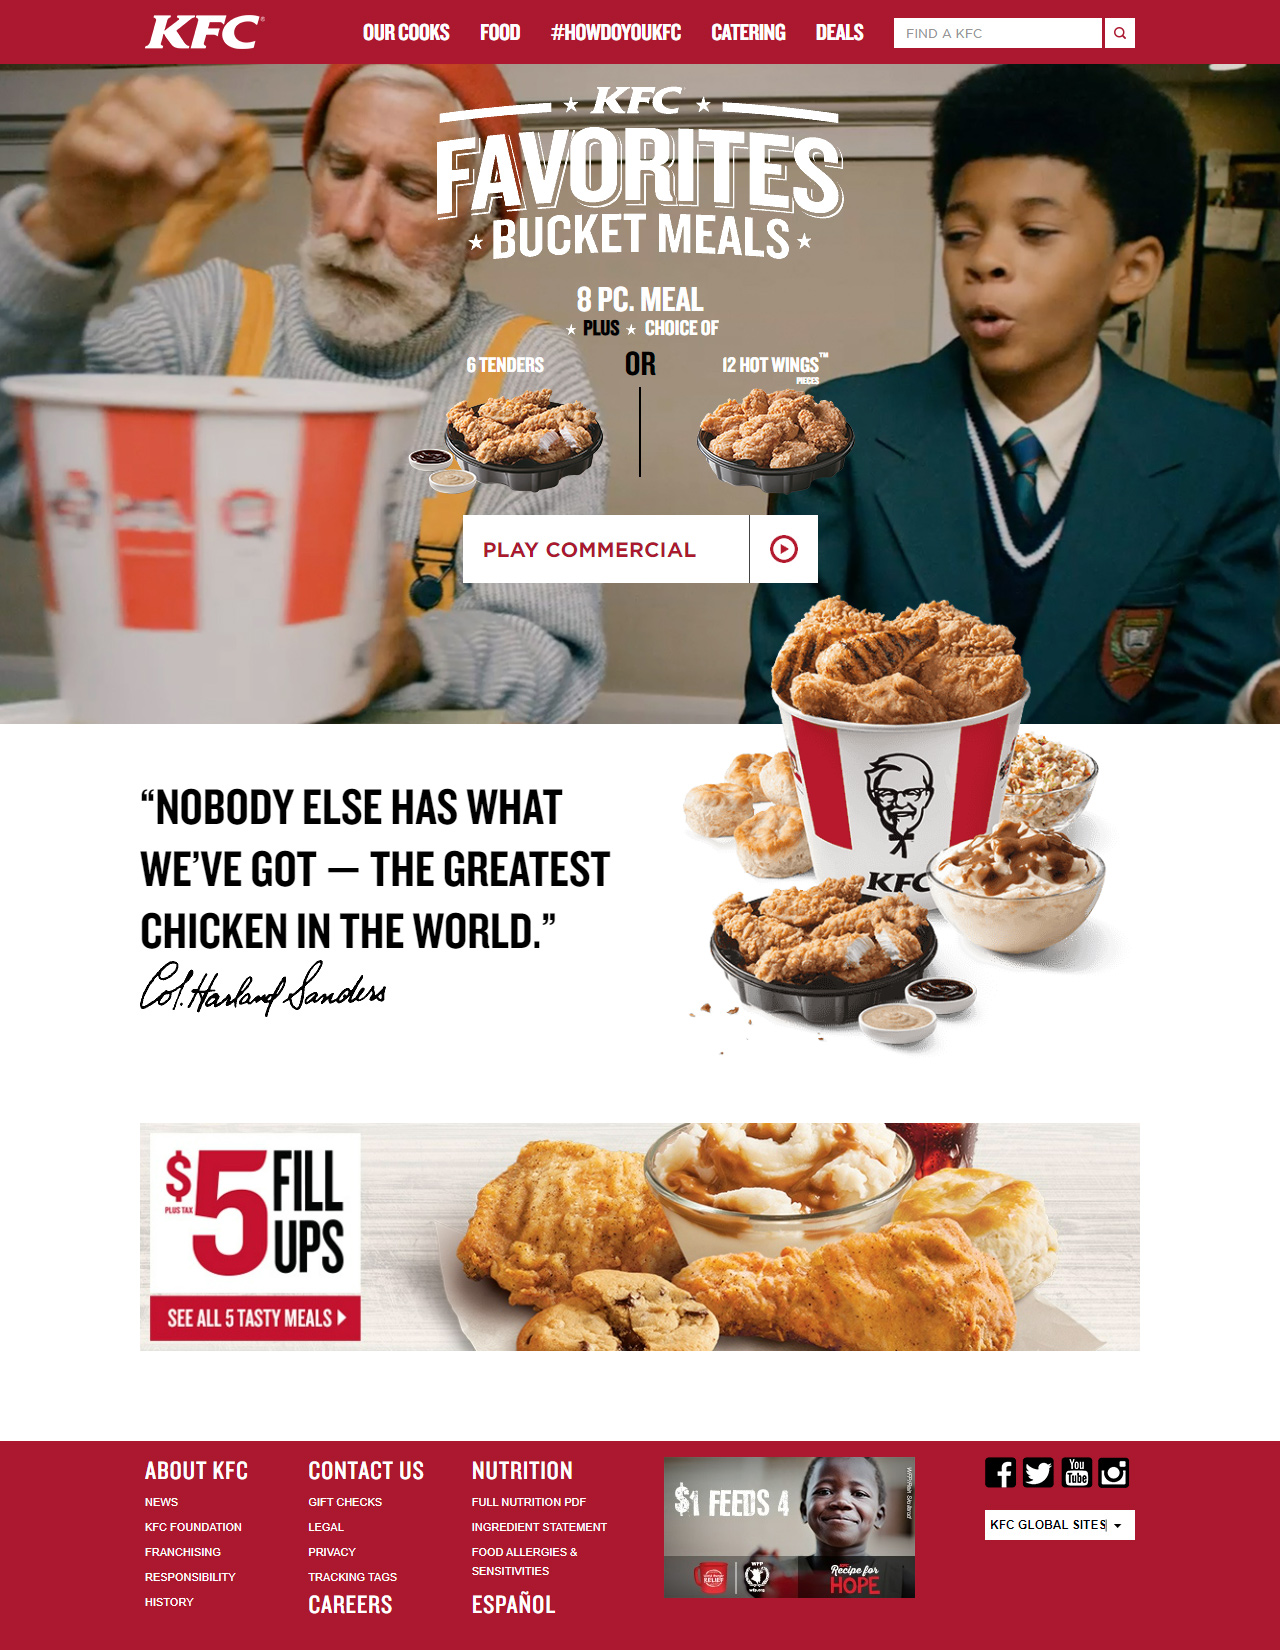 KFC website in 2014